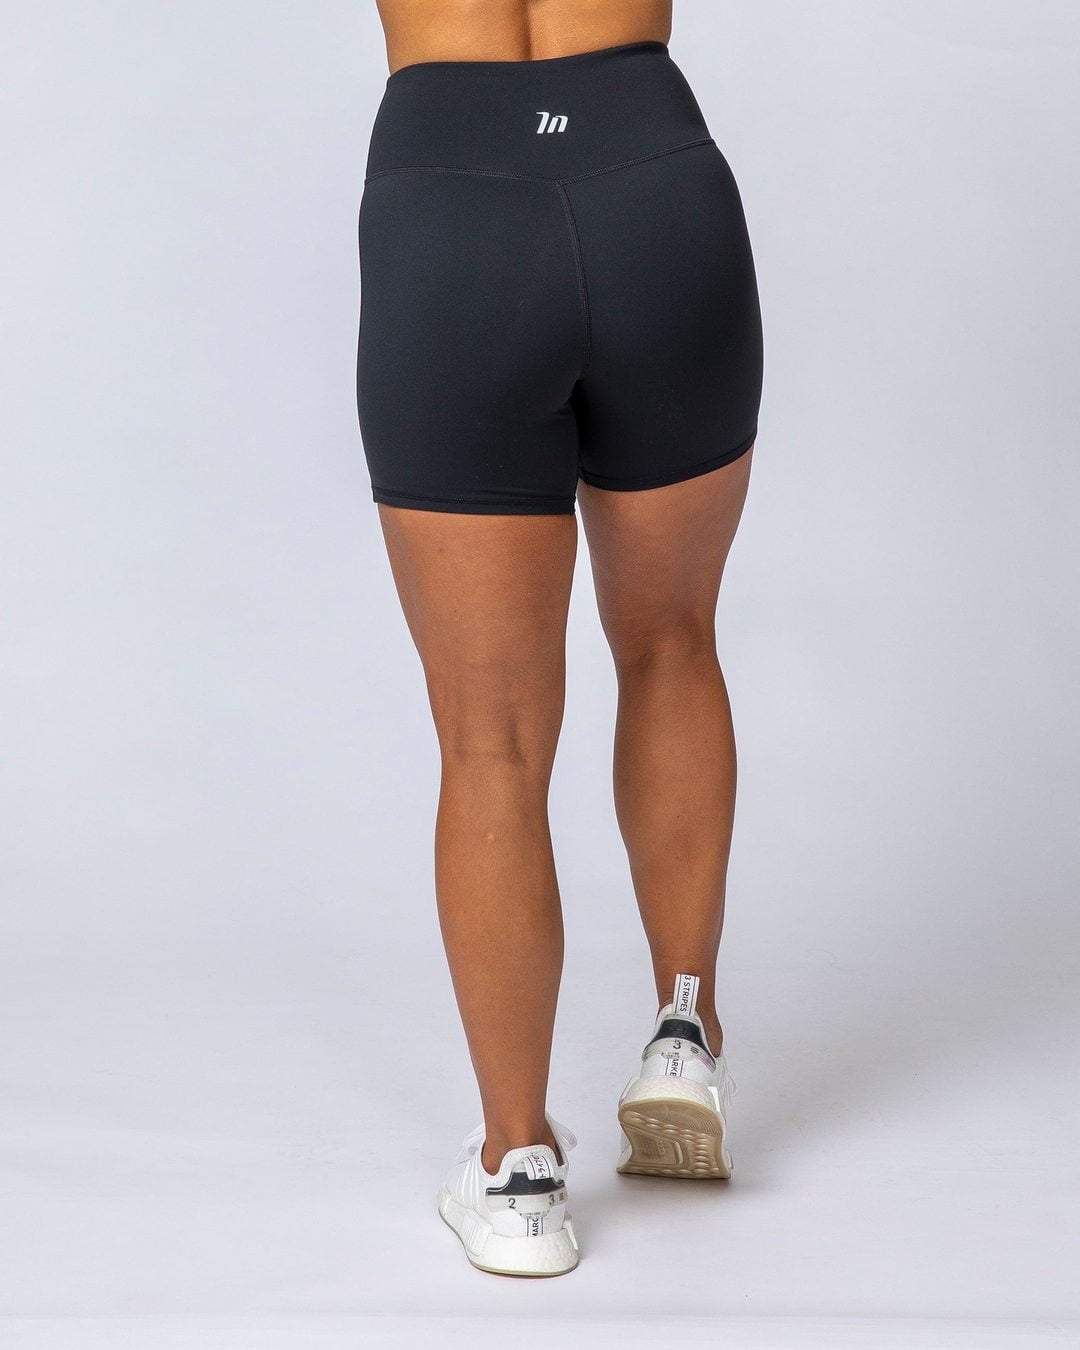 musclenation Superior Squat Bike Shorts - Black